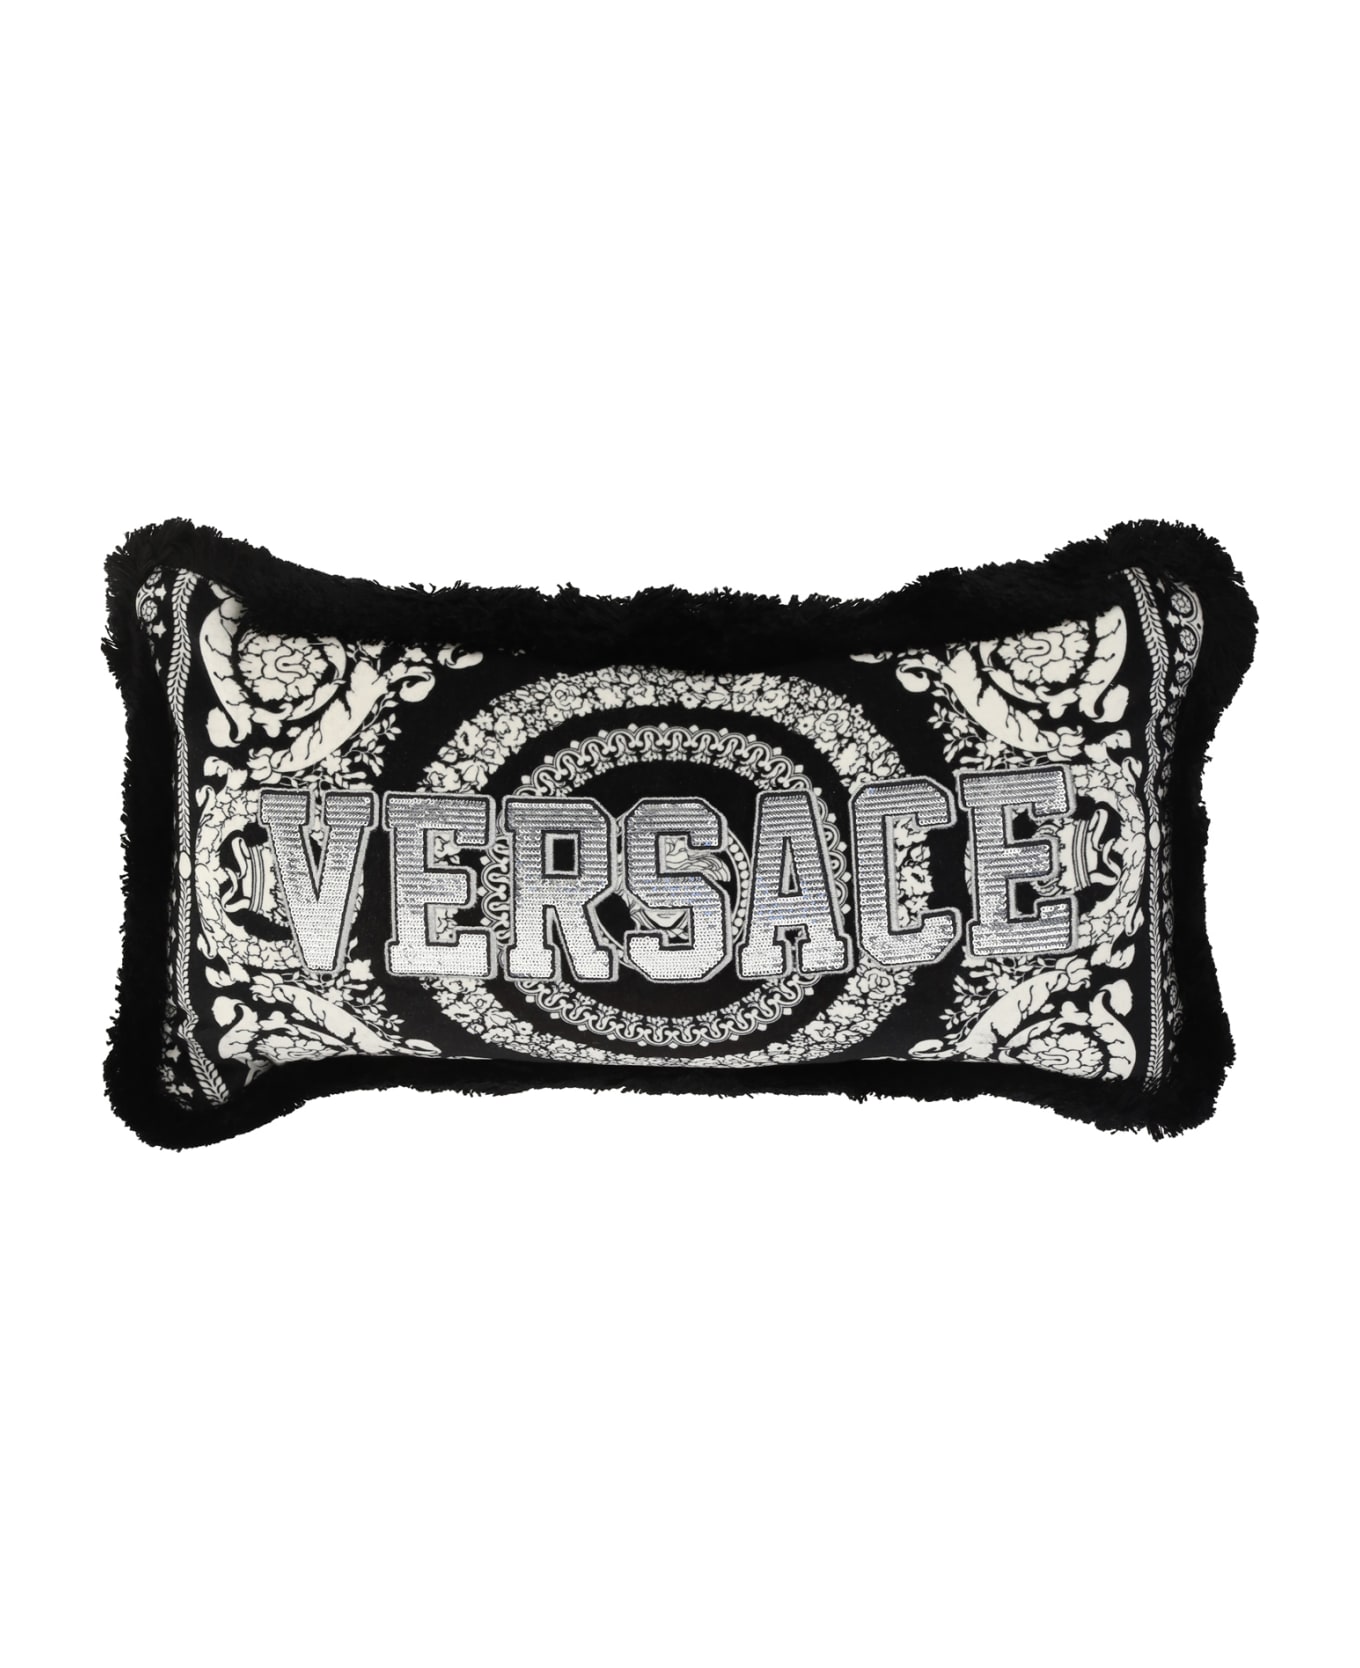 Versace Rectangular Pillow - Nero/bianco クッション